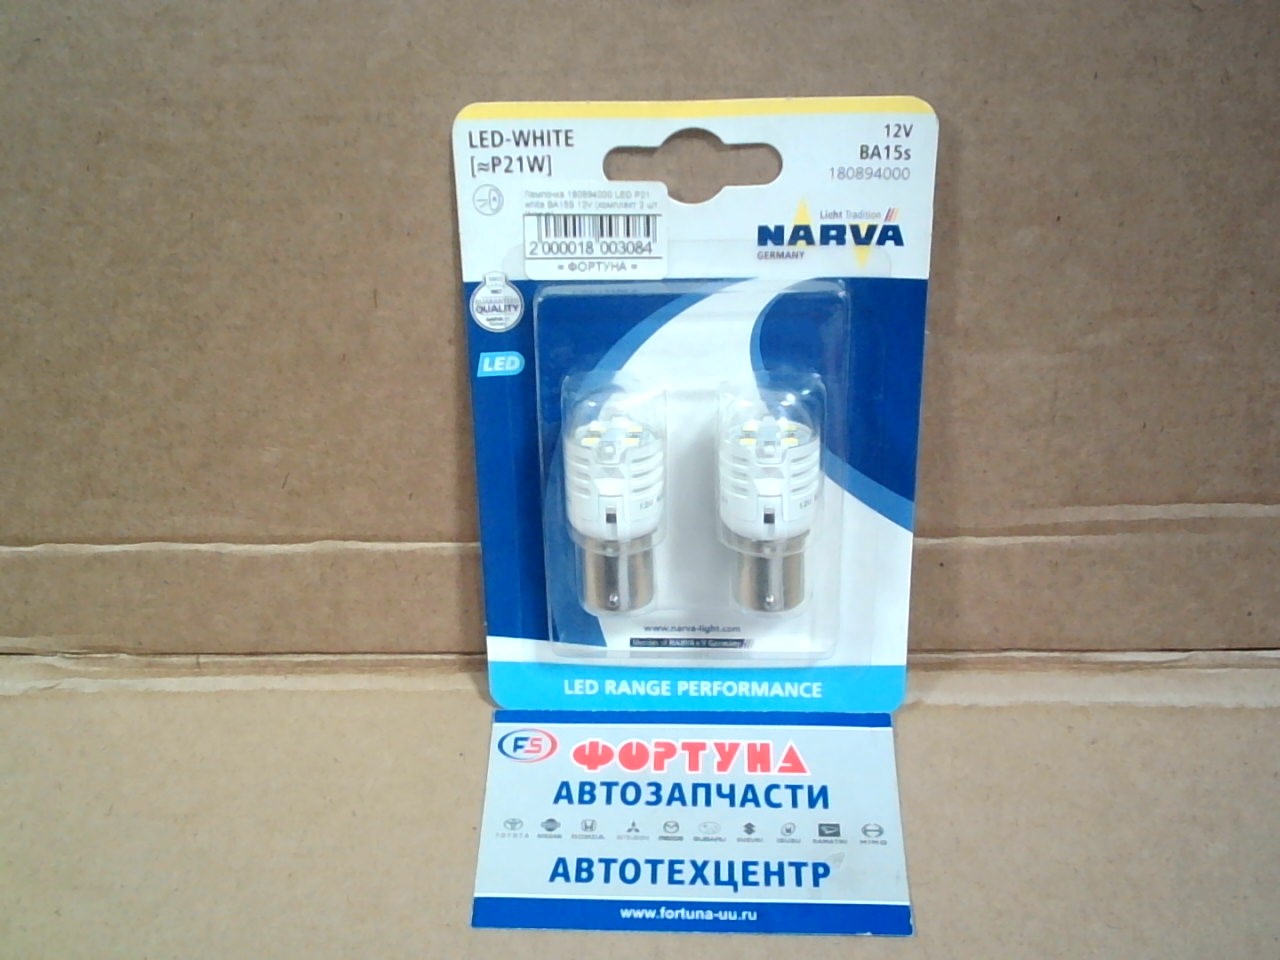 Лампочка 180894000 LED P21 white BA15S 12V (комплект 2 шт.) [Narva] на  